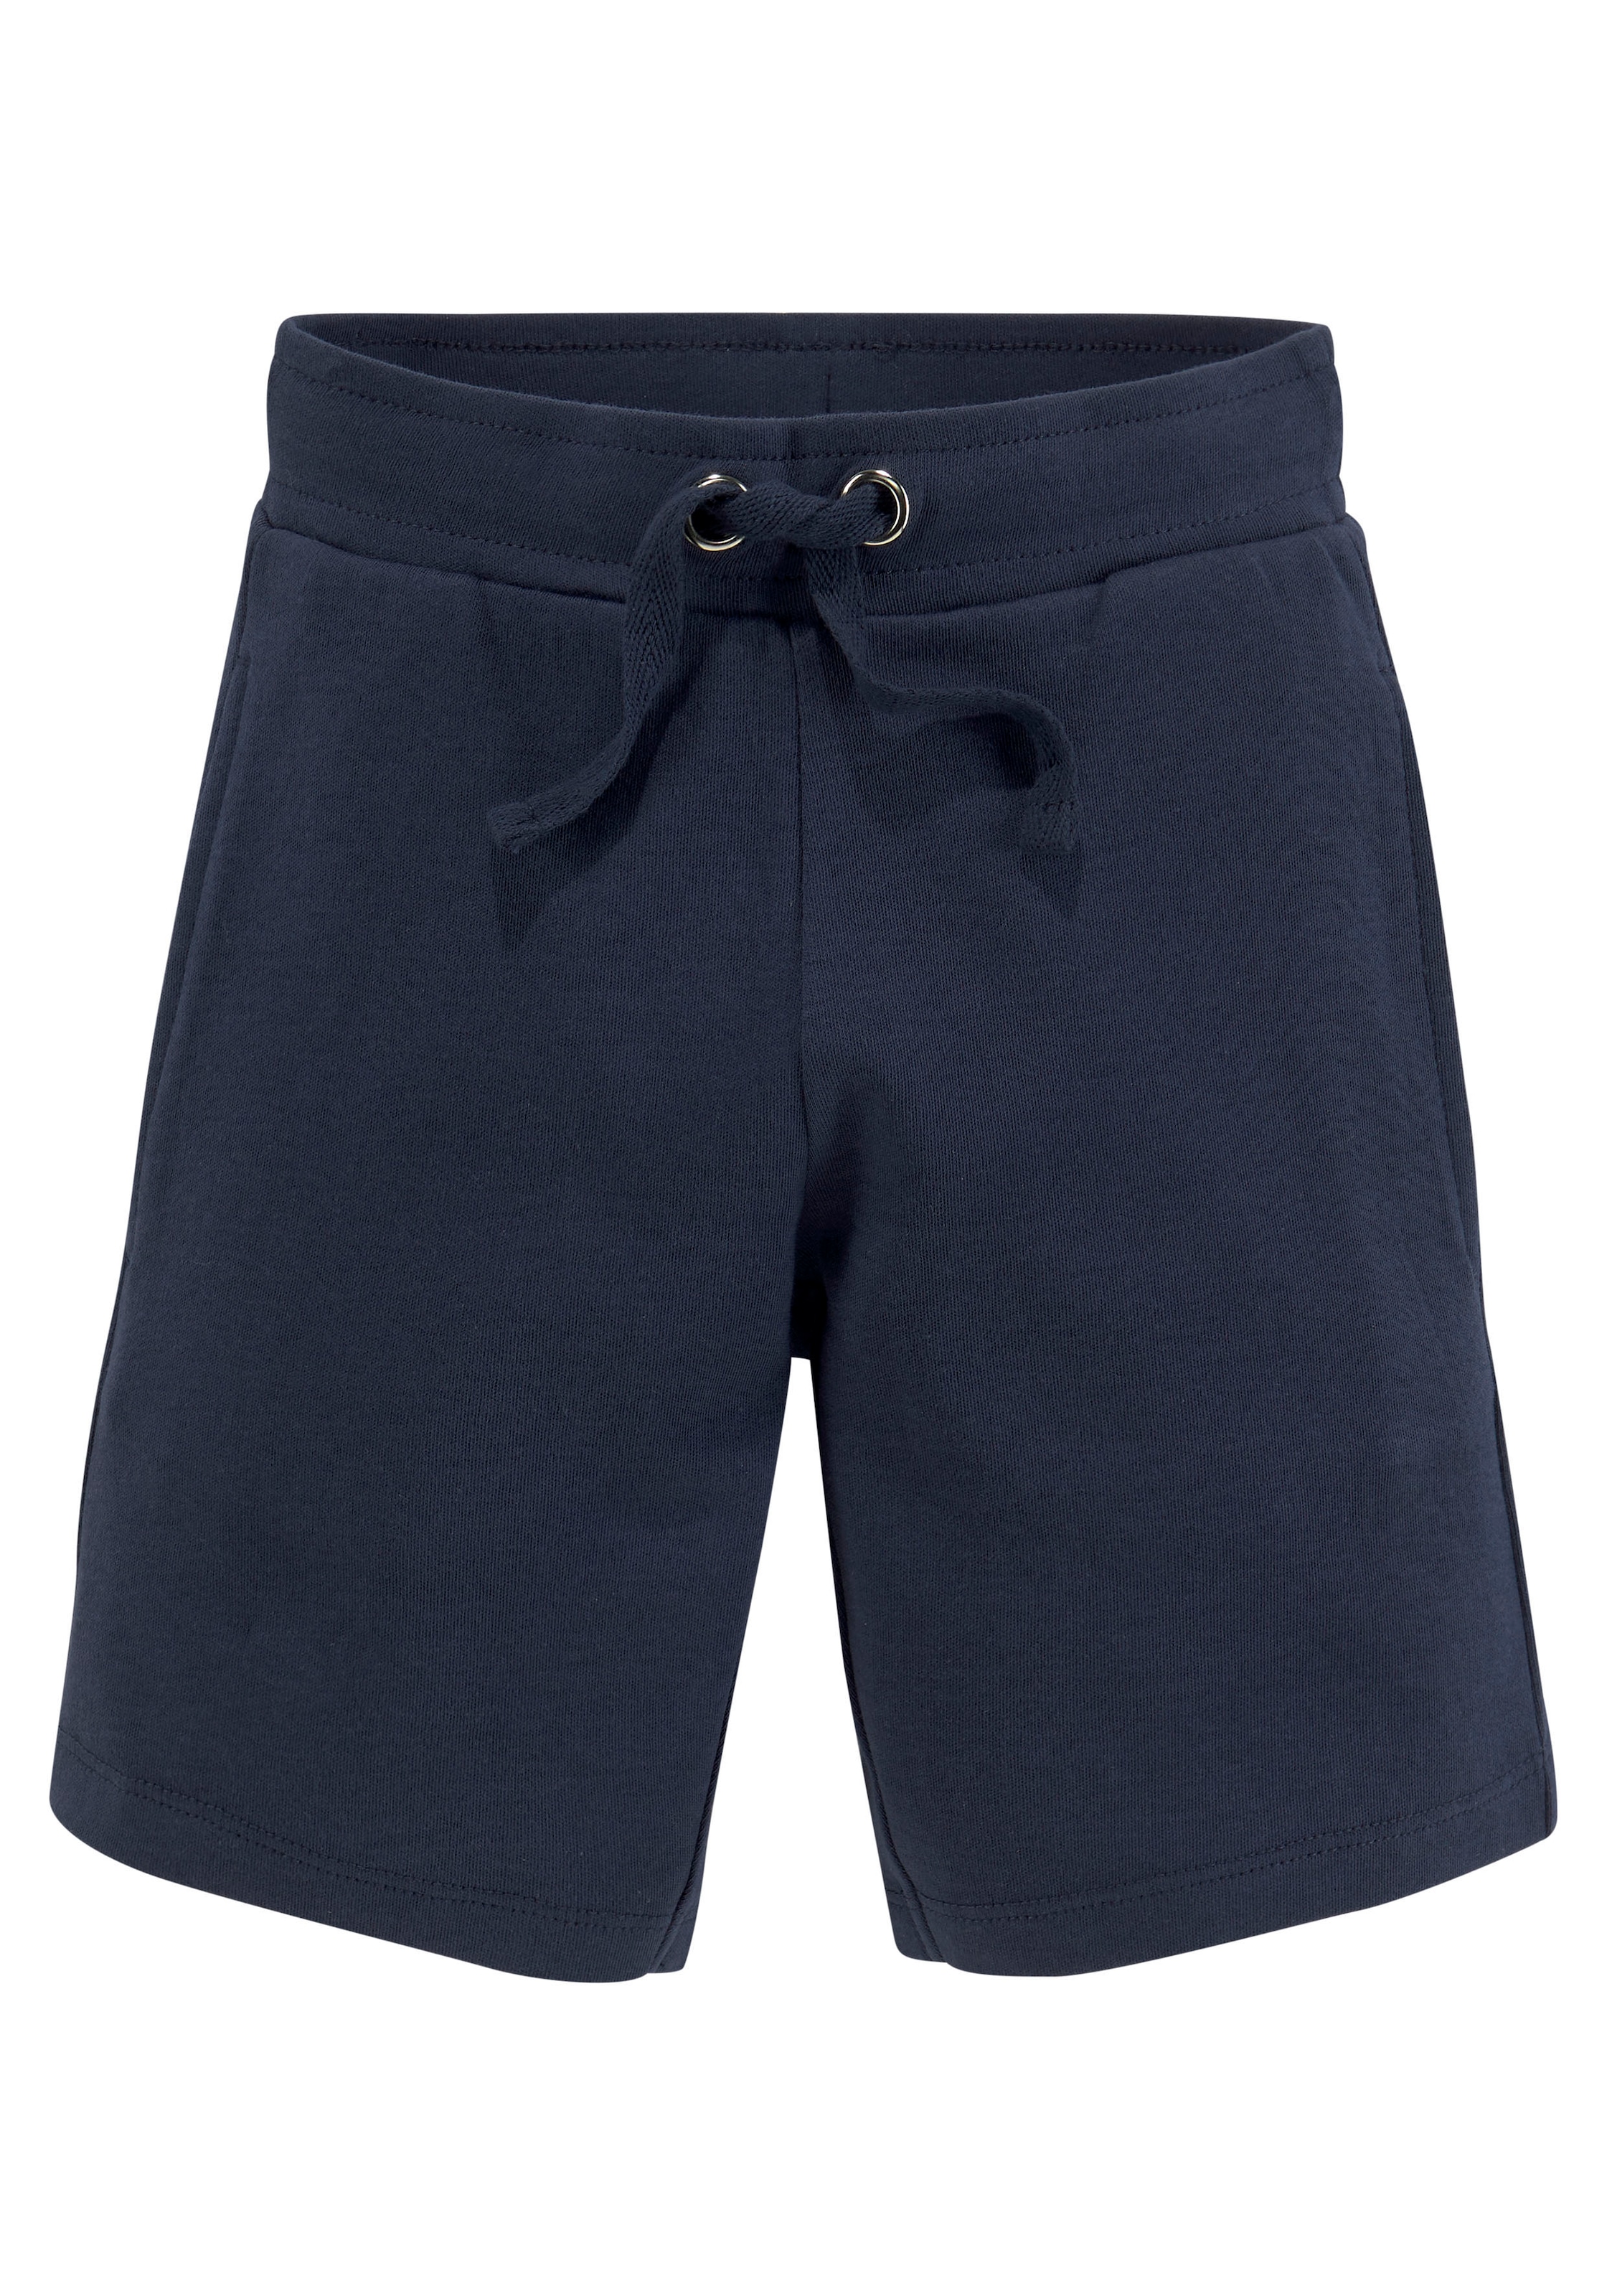 KIDSWORLD Shirt & Shorts, (Spar-Set, 2 tlg., T-Shirt+Sweatbermudas), BOYS AT WORK